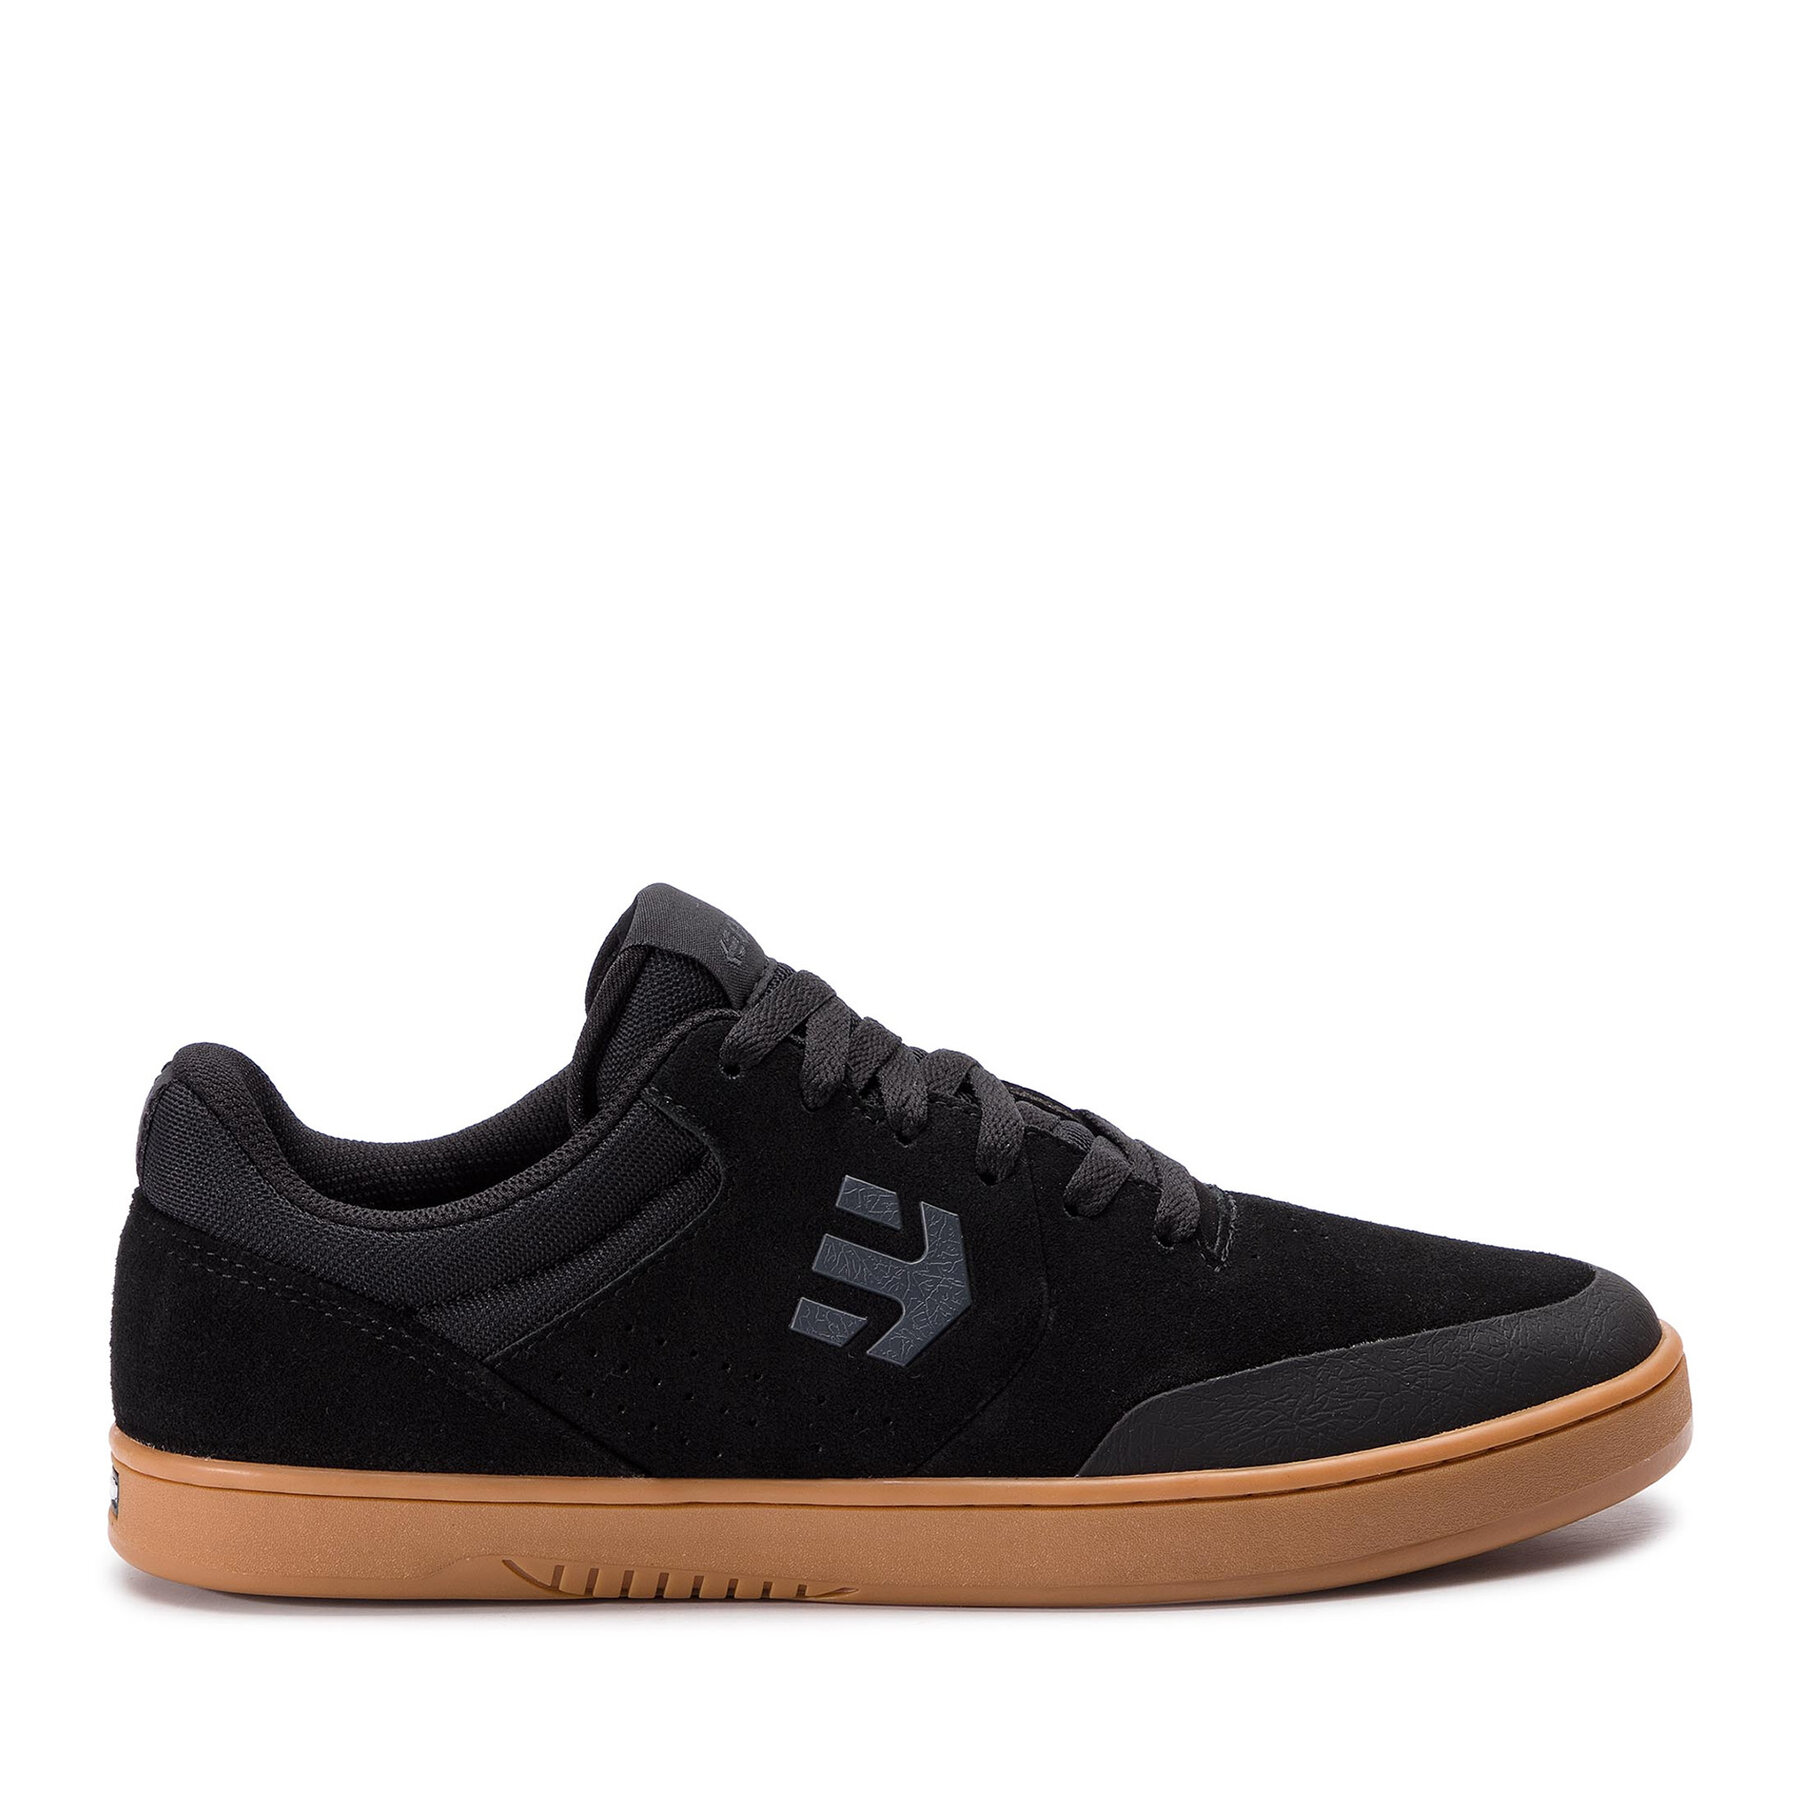 Sneakers Etnies Marana 4101000403 Black/Dark Grey/Gum 566 von Etnies